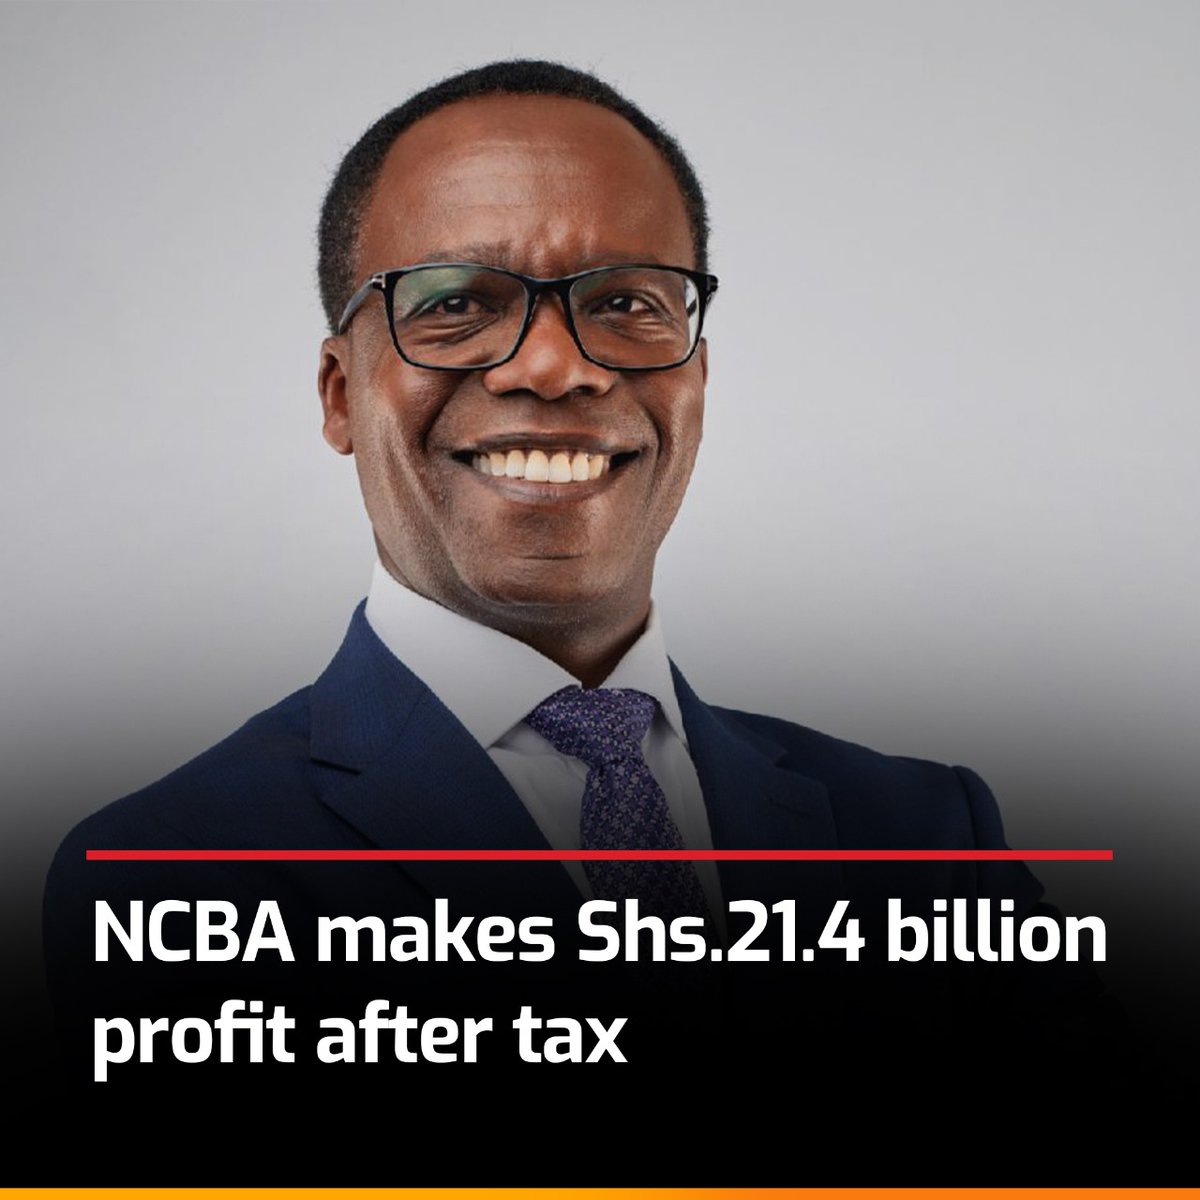 The profitability of companies like Safaricom and NCBA reflects the vibrancy of Kenya's economic landscape. Kenyans SPENDING, PESA iko. #MarketConfidence